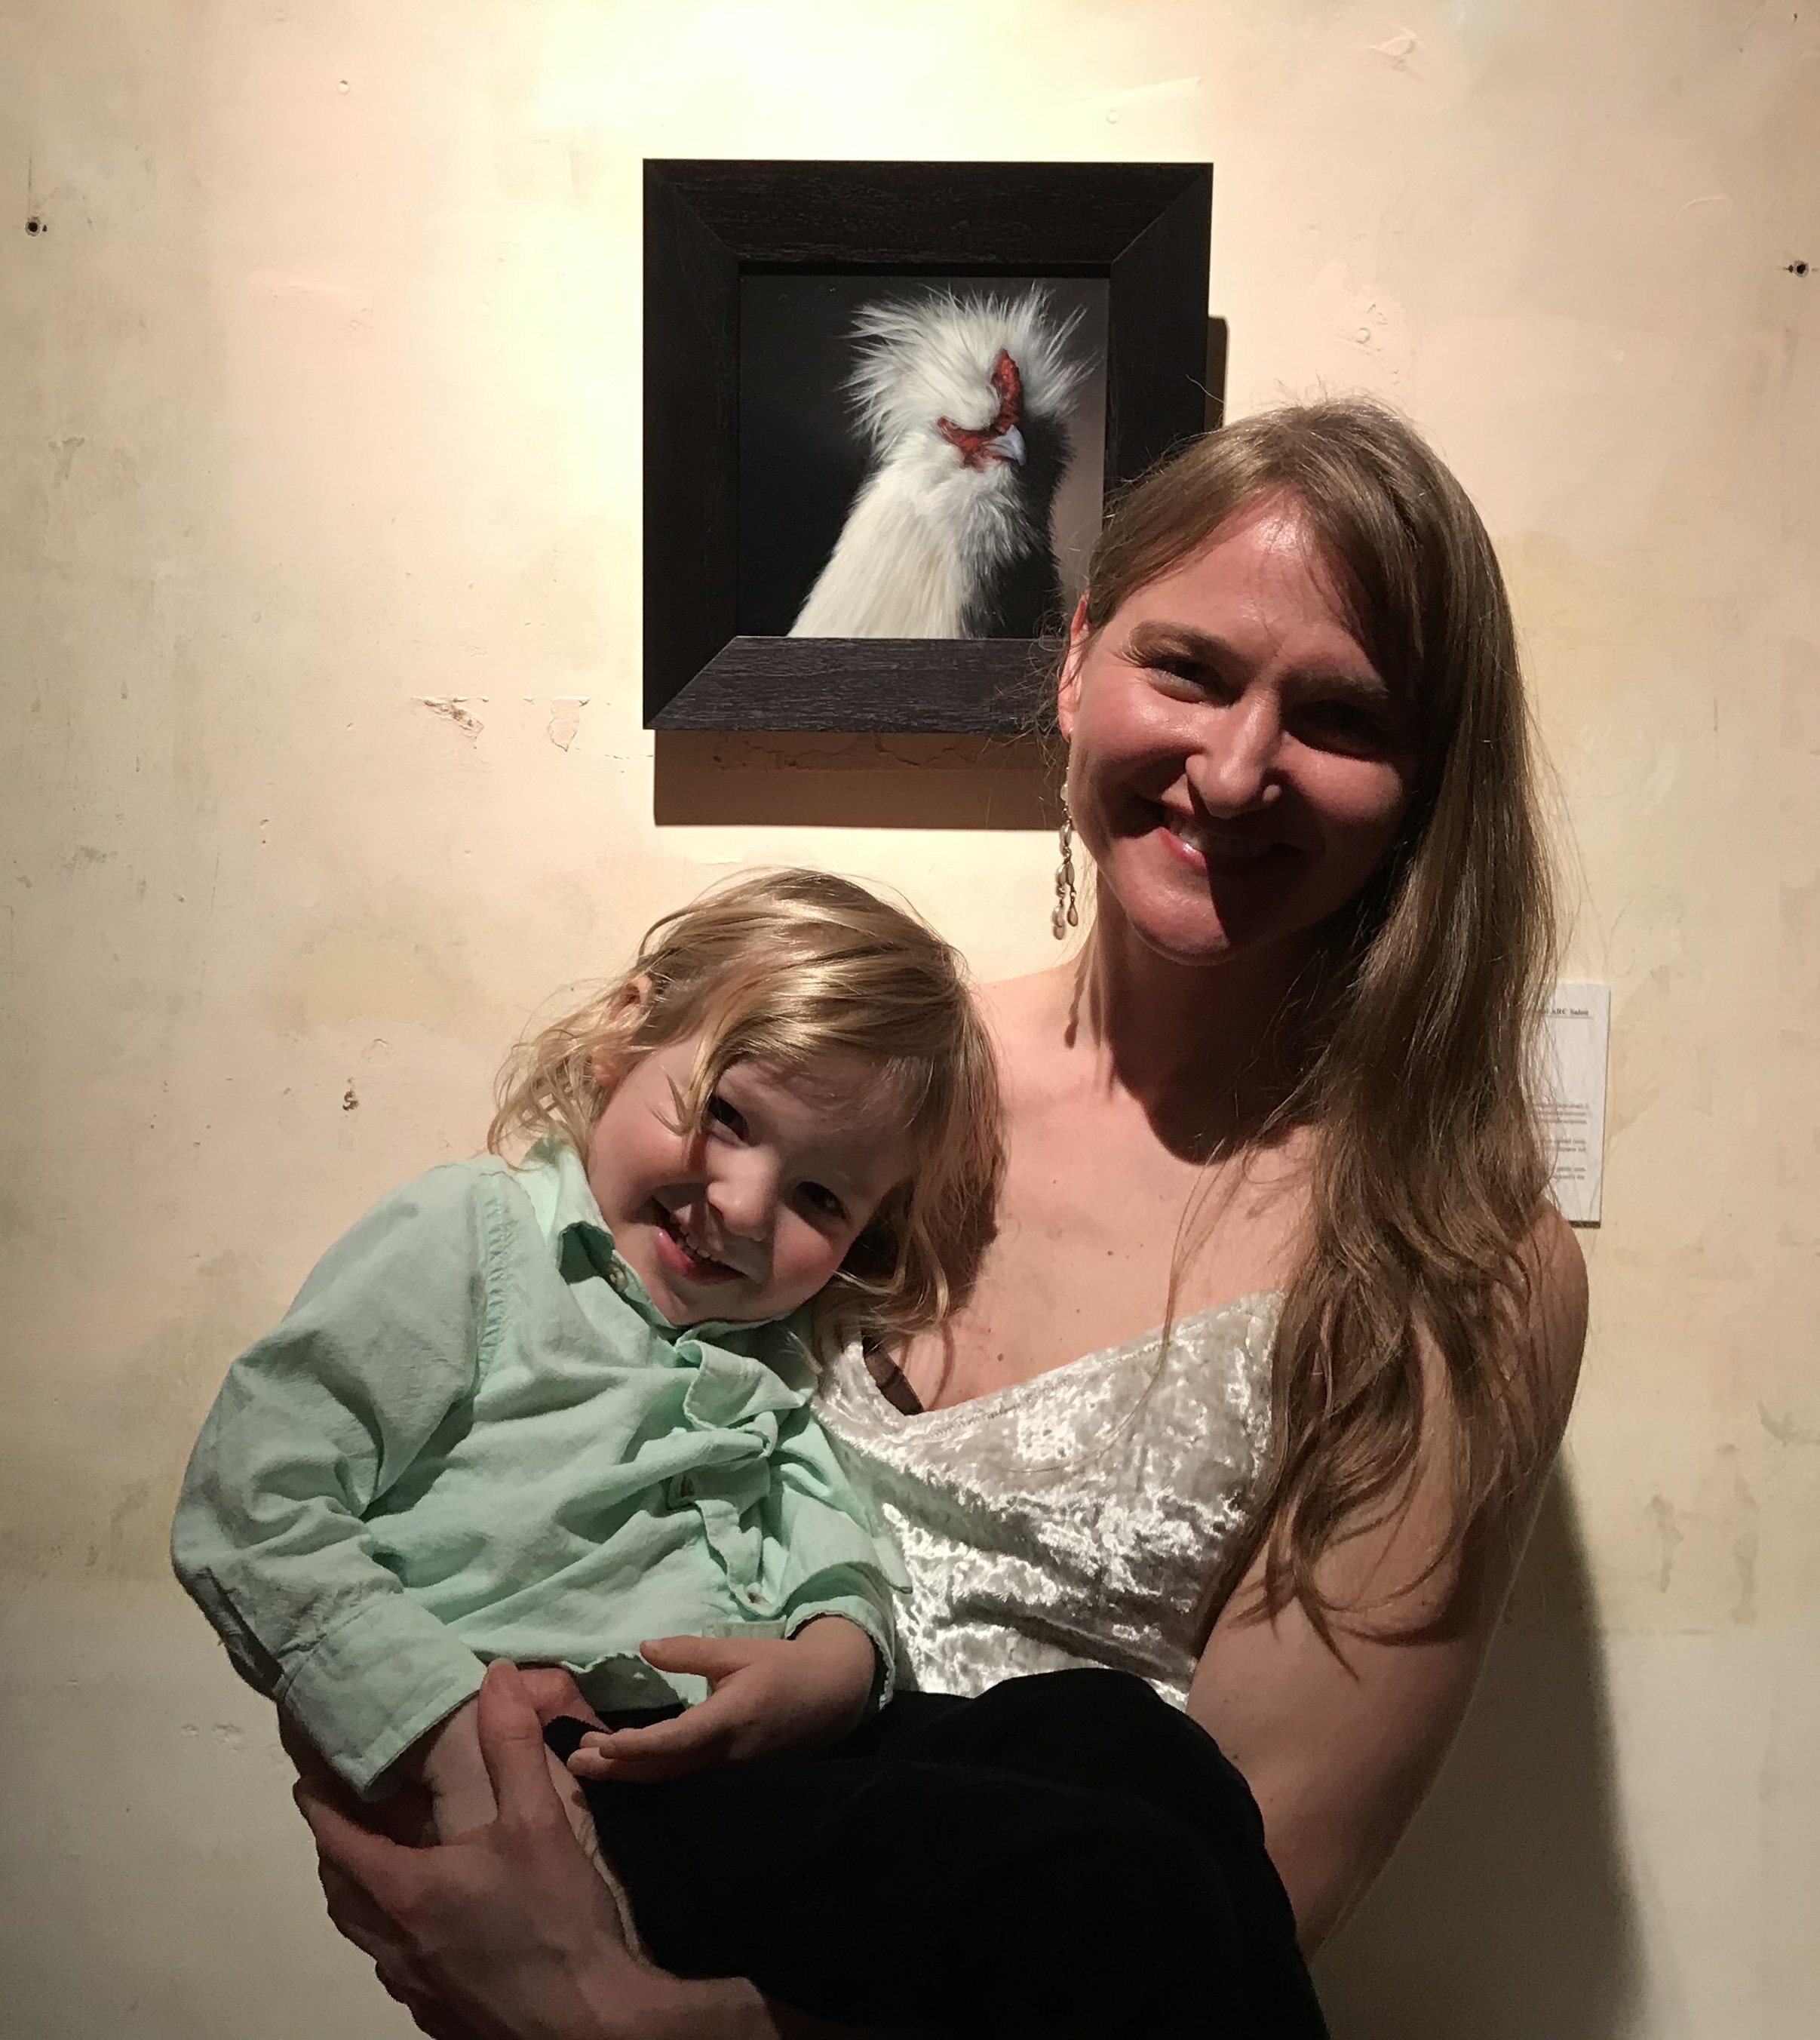 ARC Salon 2019 exhibition at the MEAM - Museu Europeu d'Art Modern. Artist Rebecca Luncan with her son